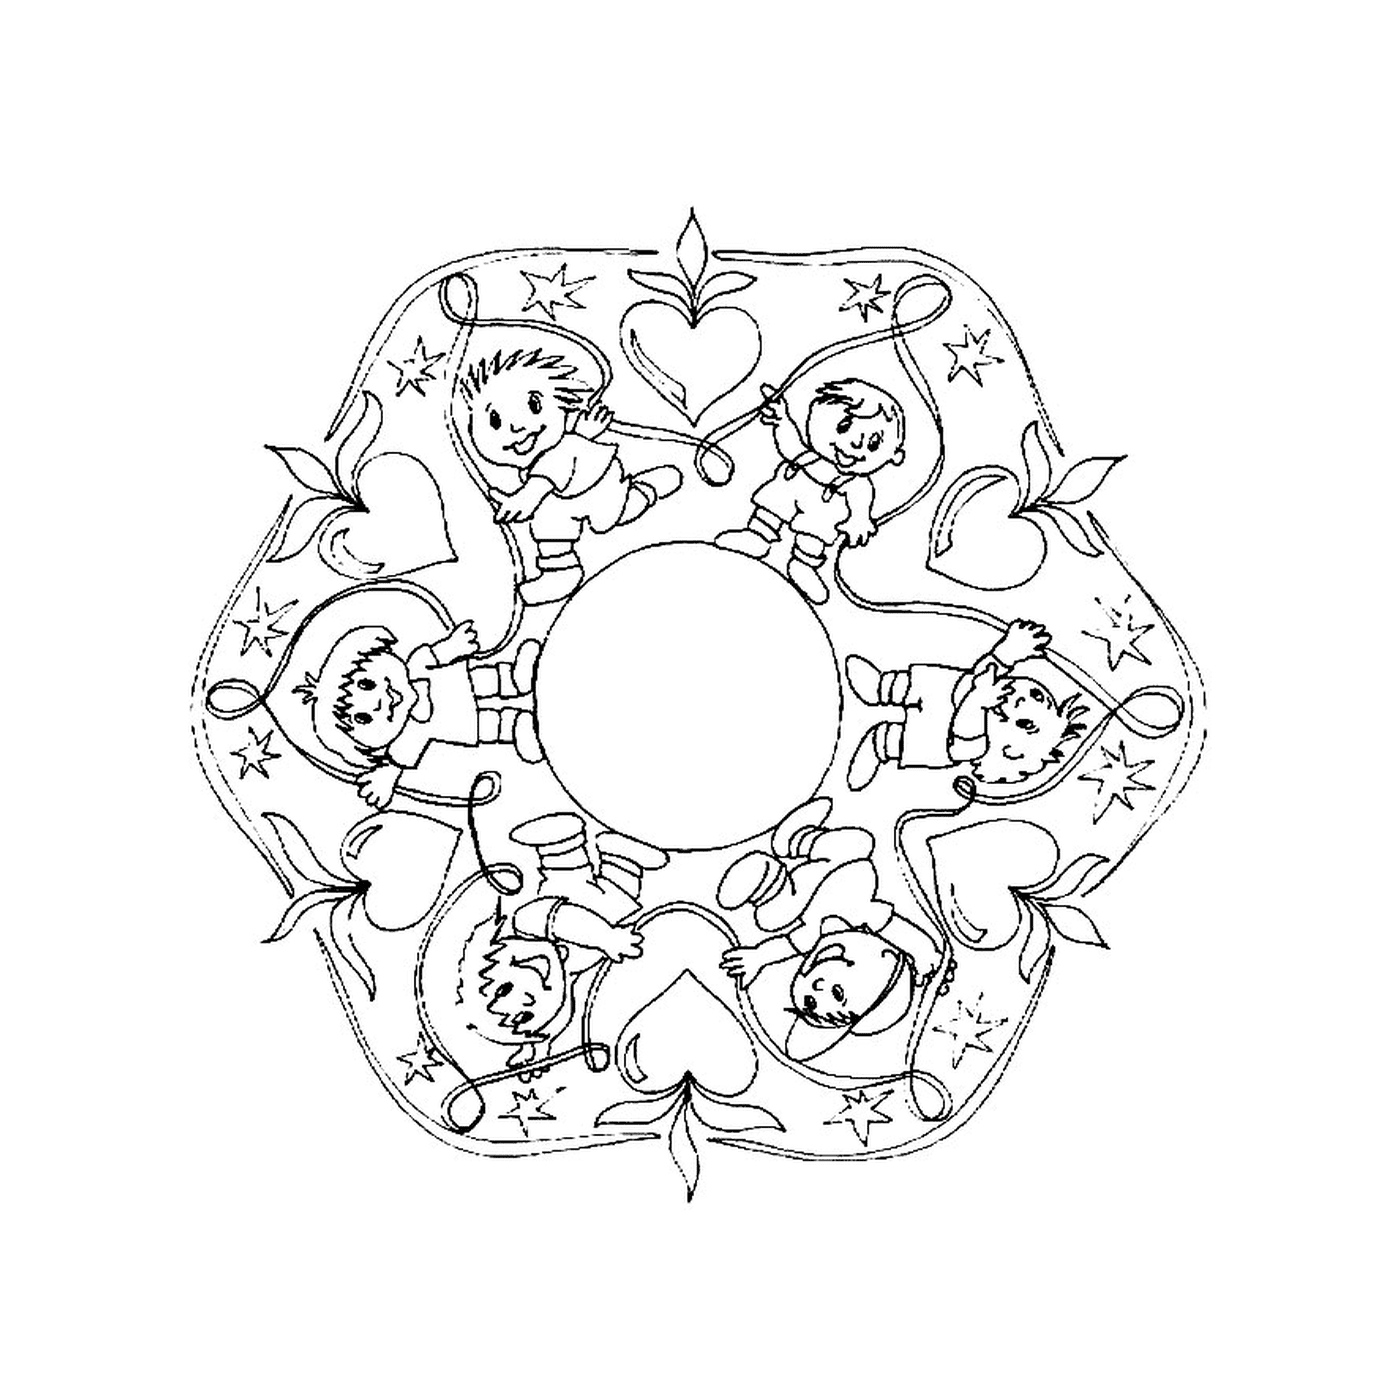  Mandala with characters 